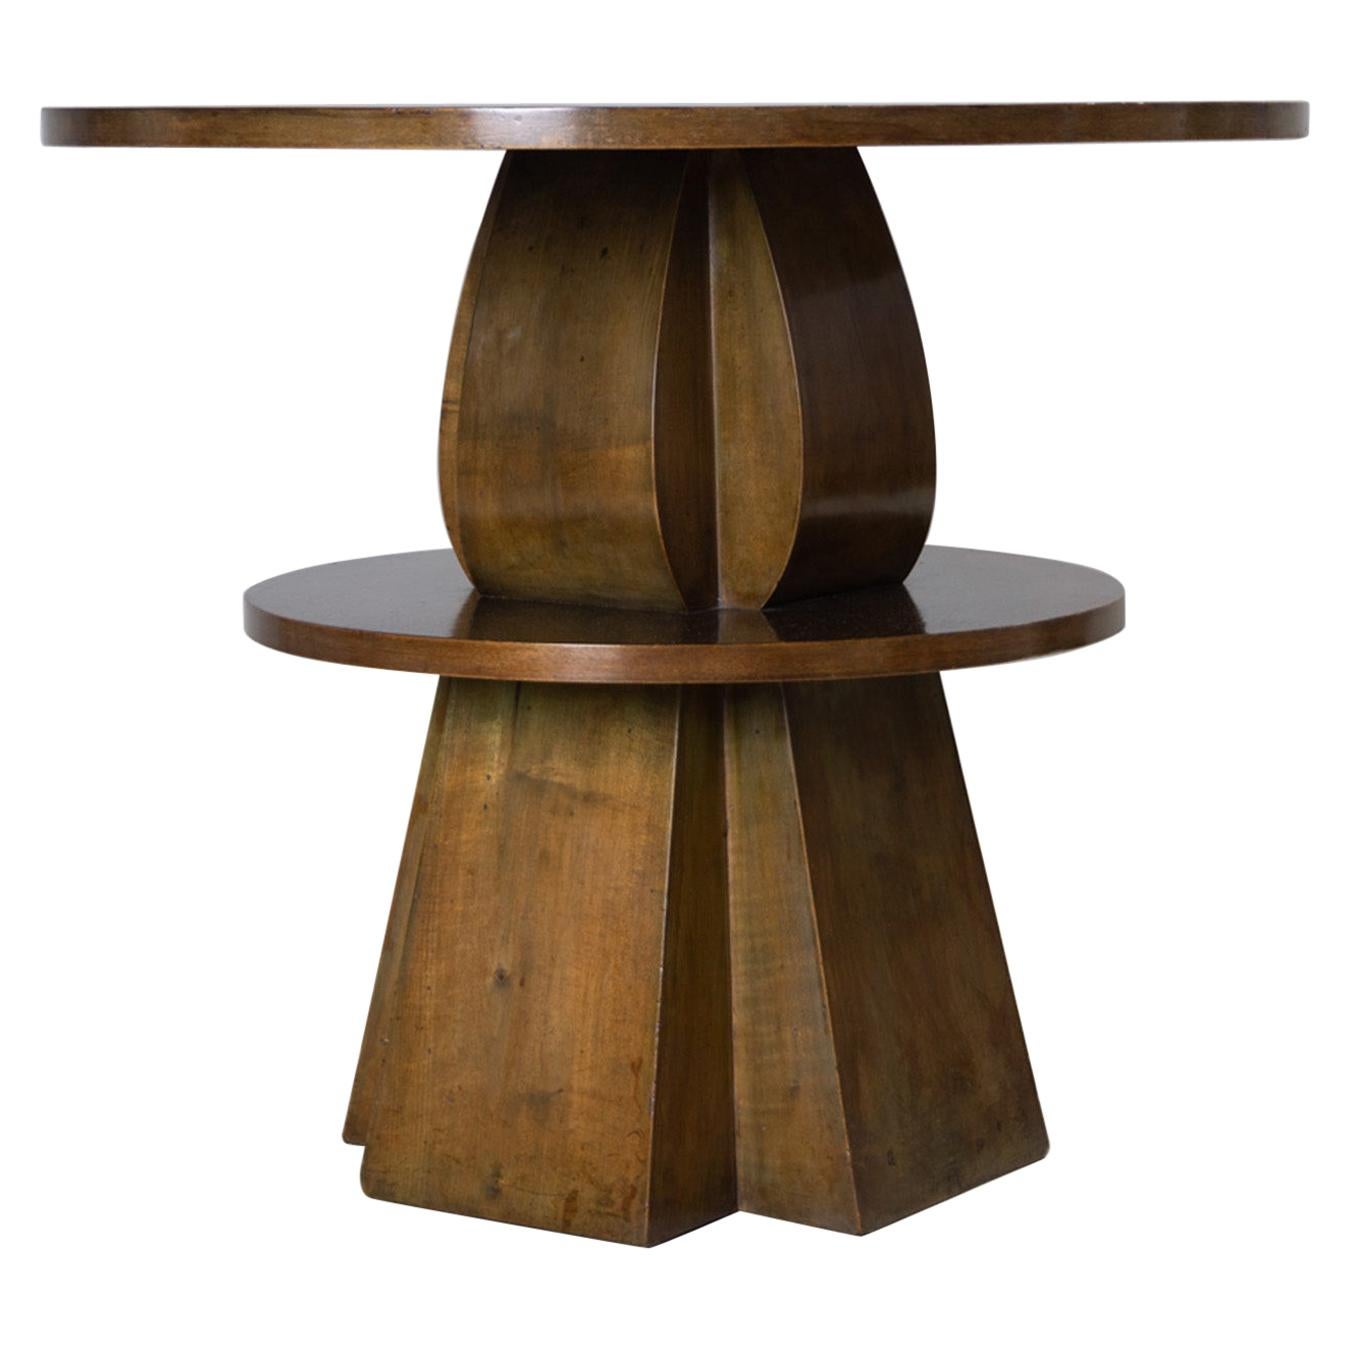 Walnut and Birdseye Maple, Round Side Table, Giacomo Cometti, 1928